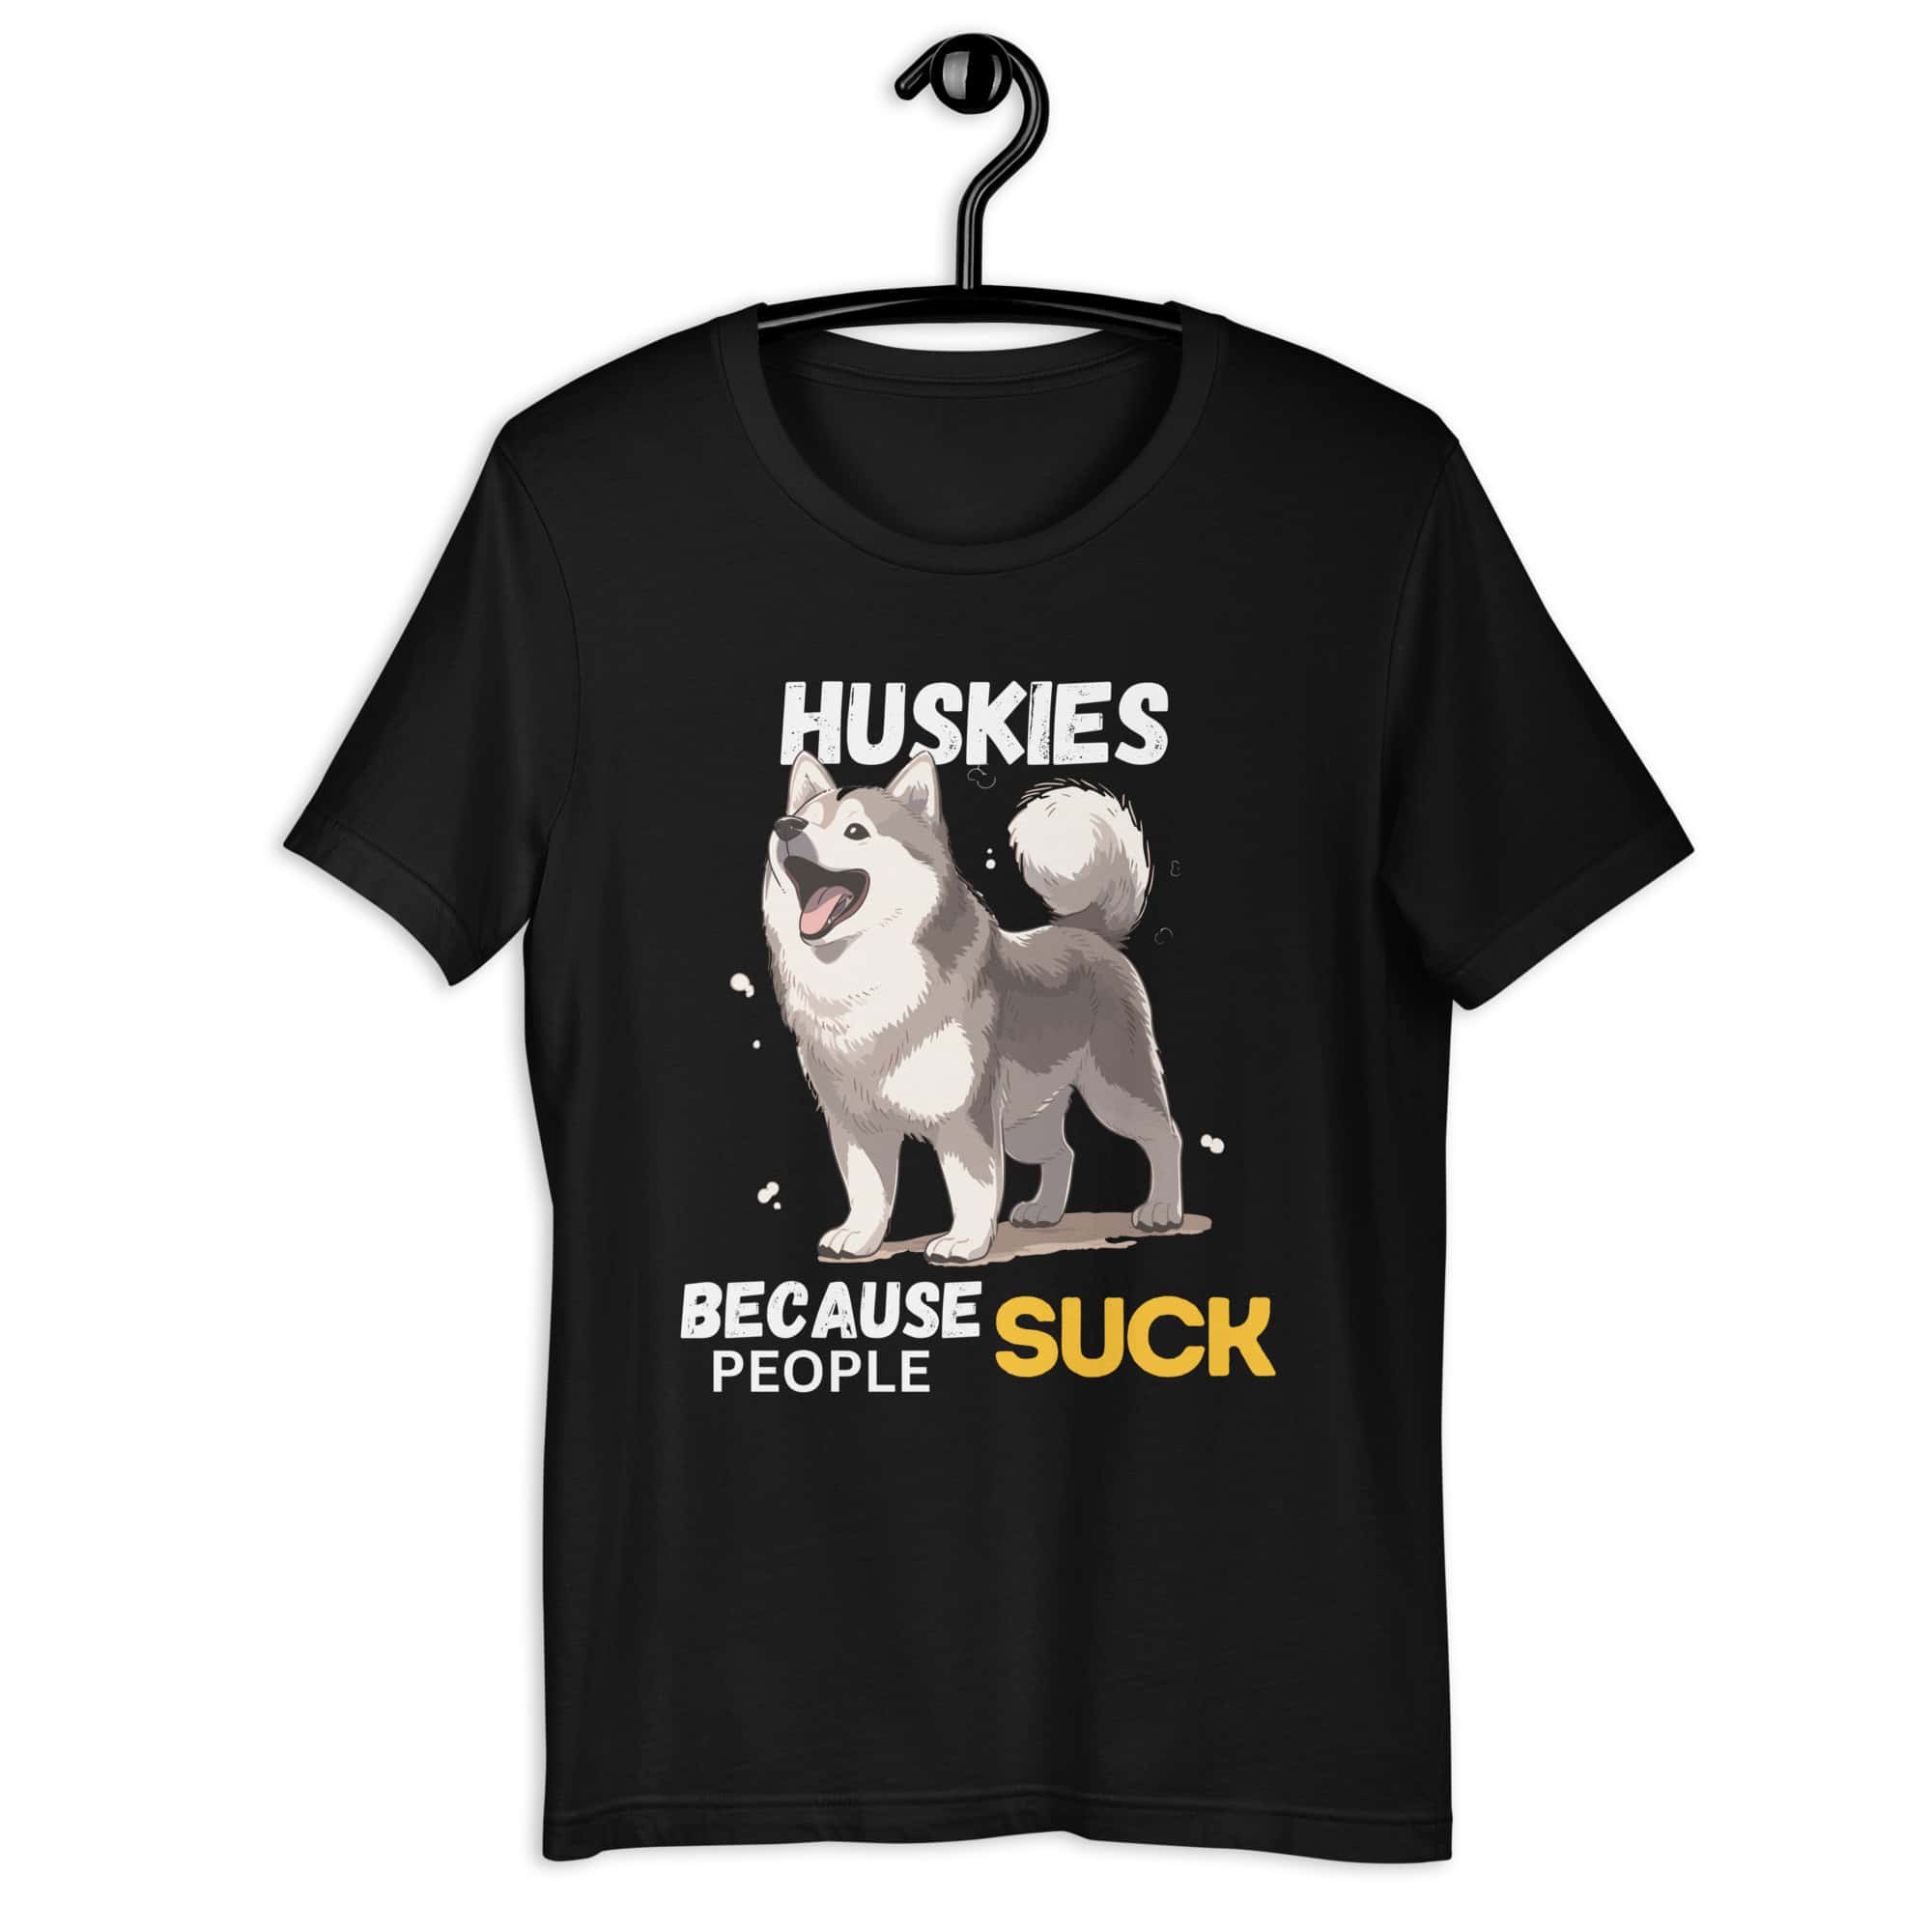 Huskies Because People Suck Unisex T-Shirt jet black